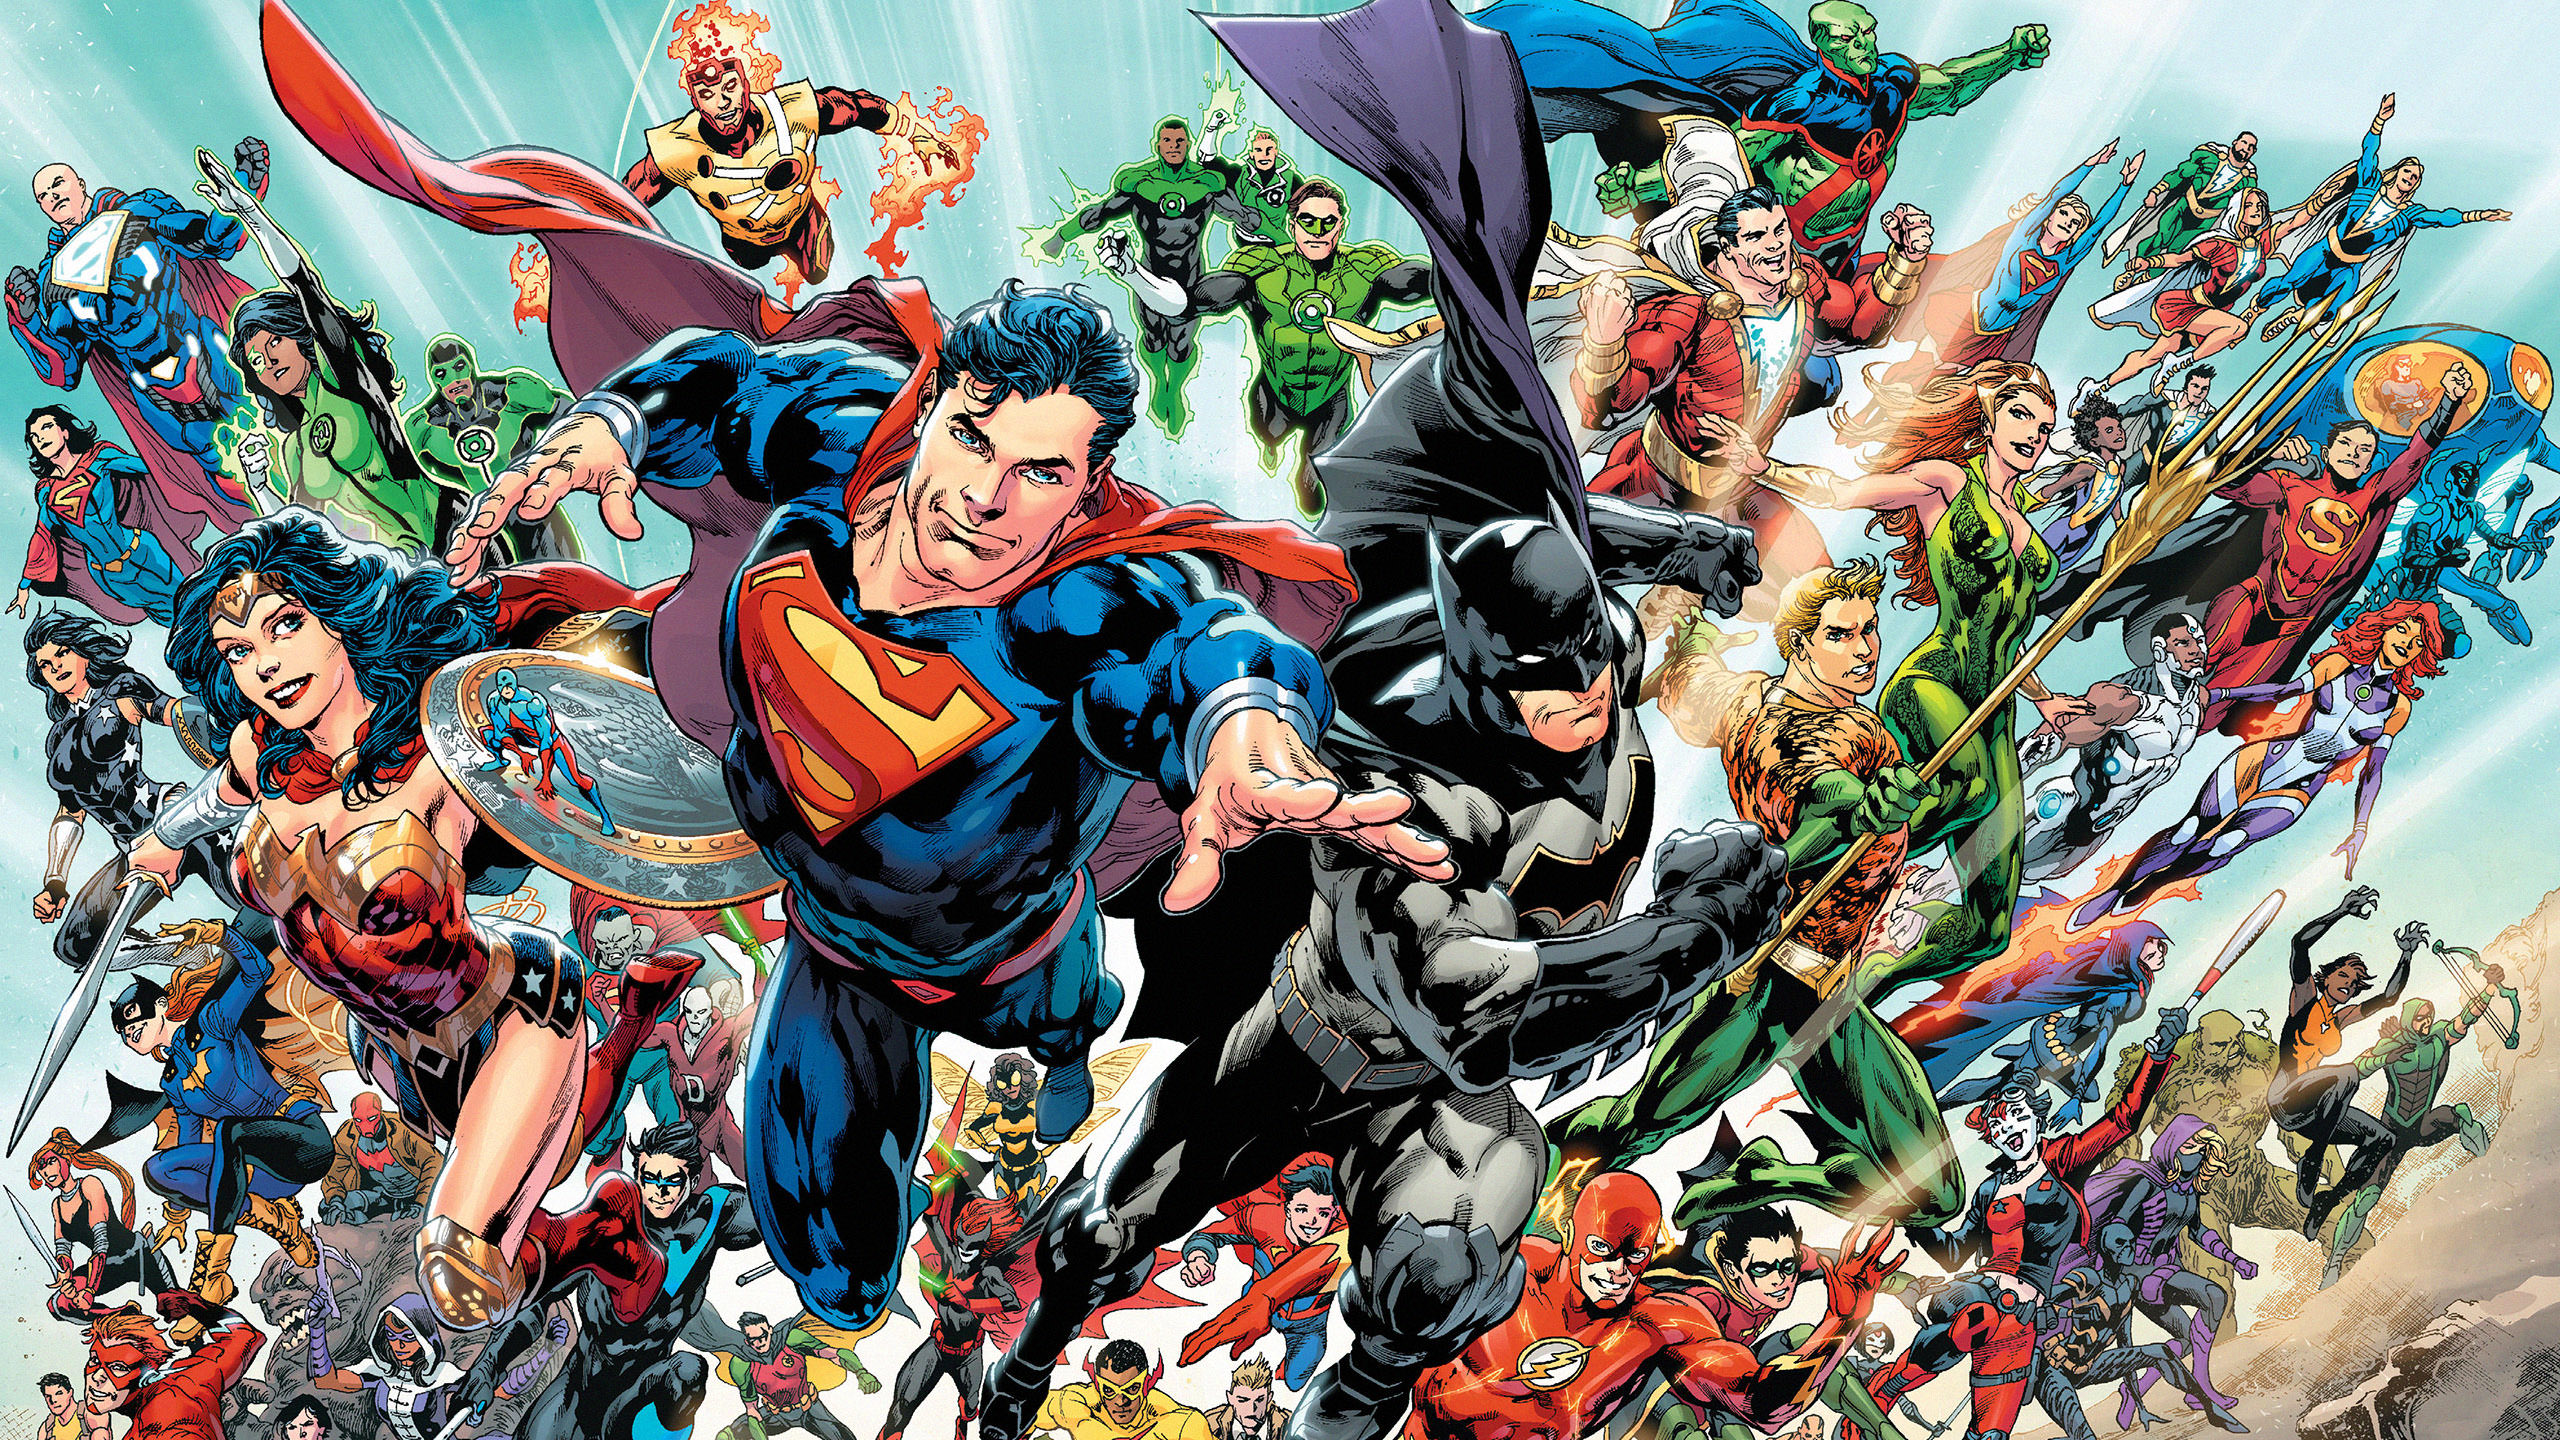 superman, super man (dc comics), lois lane, blue beetle (dc comics), comics, dc: rebirth, aquaman, artemis (wonder woman), atom (dc comics), barry allen, batgirl, batman, batwoman, big barda, billy batson, bumblebee (dc comics), cyborg (dc comics), damian wayne, dc comics, deadman (dc comics), eugene choi (dc comics), firestorm (dc comics), flash, freddy freeman (dc comics), green arrow, green lantern, guy gardner, hal jordan, harley quinn, j'onn j'onzz, jaime reyes, jason todd, jessica cruz (green lantern), john constantine, john stewart (green lantern), jon kent, katana (dc comics), kate kane, lady shazam (dc comics), lex luthor, martian manhunter, mera (dc comics), nightwing, raven (dc comics), red hood, robin (dc comics), shazam (dc comics), shazam jr (dc comics), simon baz, starfire (dc comics), superboy, supergirl, superwoman, swamp thing, tim drake, vixen (dc comics), wallace west, wally west, wonder woman